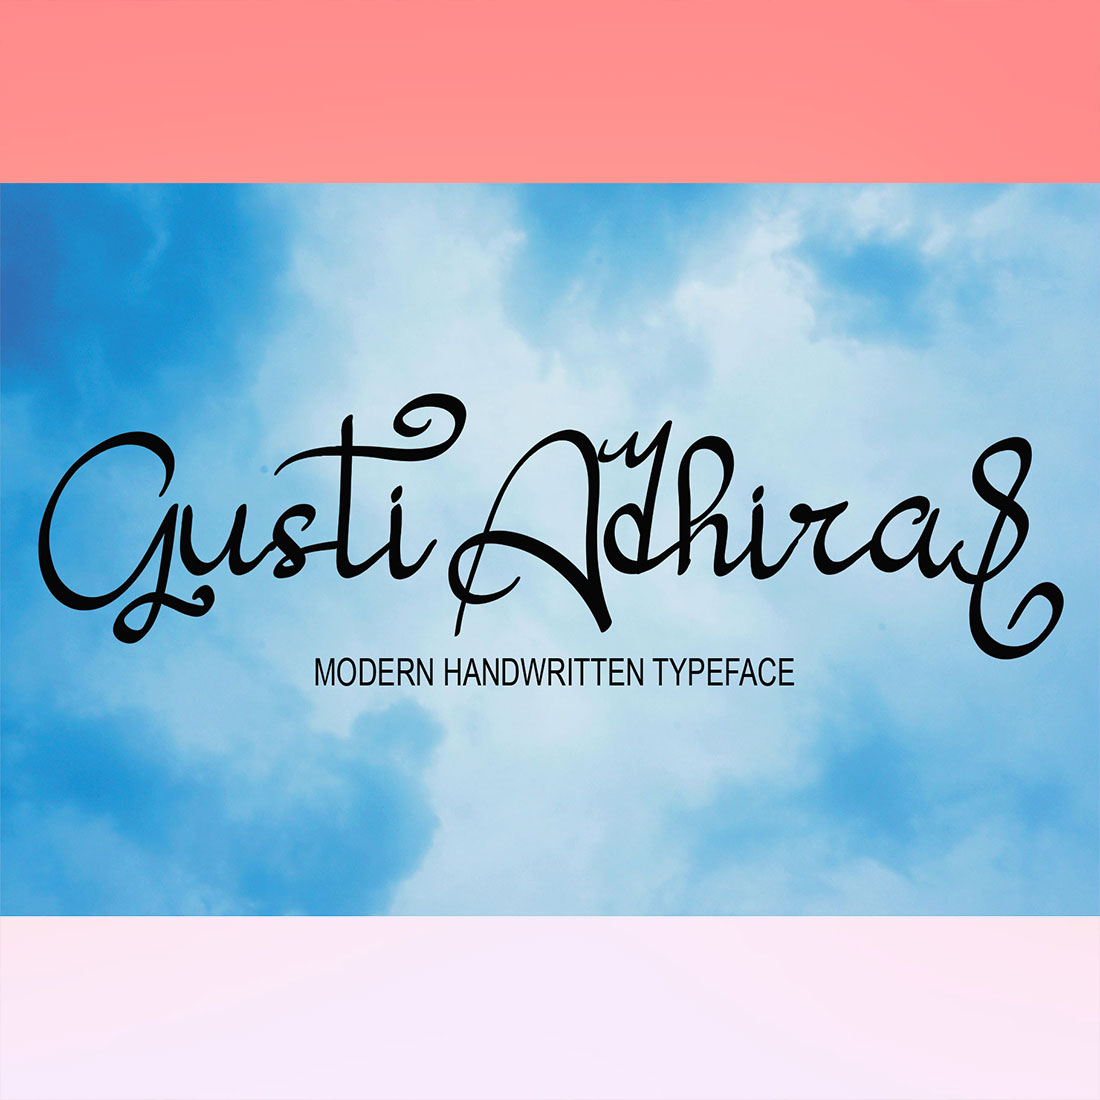 Gusti Adhira Script Font main cover.